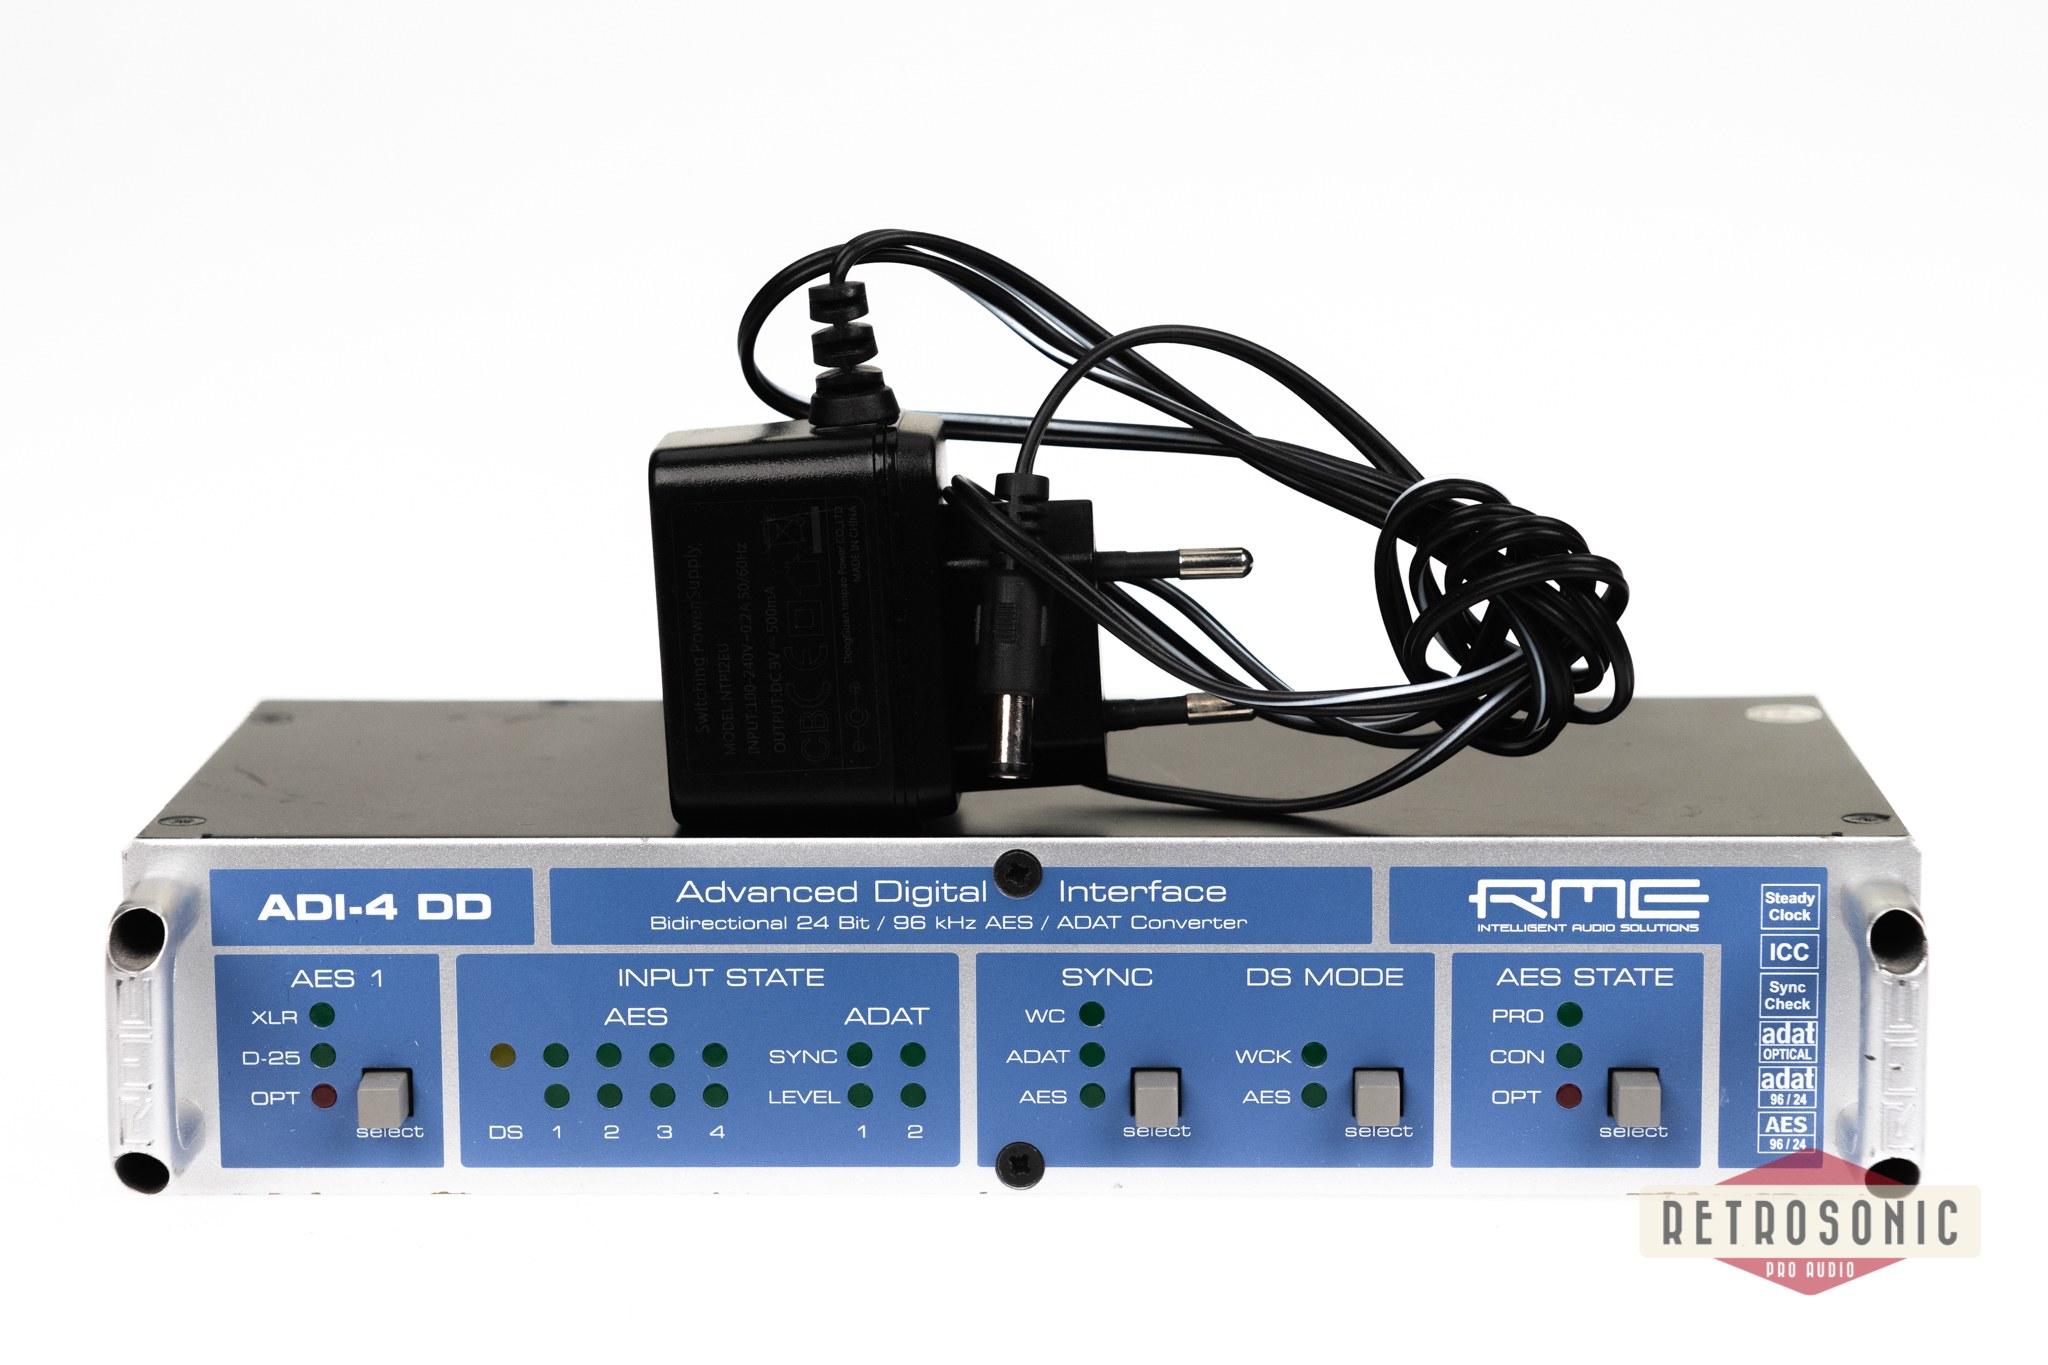 RME ADI-4 DD 24 Bit / 96 kHz, 8-Channel AES/EBU ADAT Converter